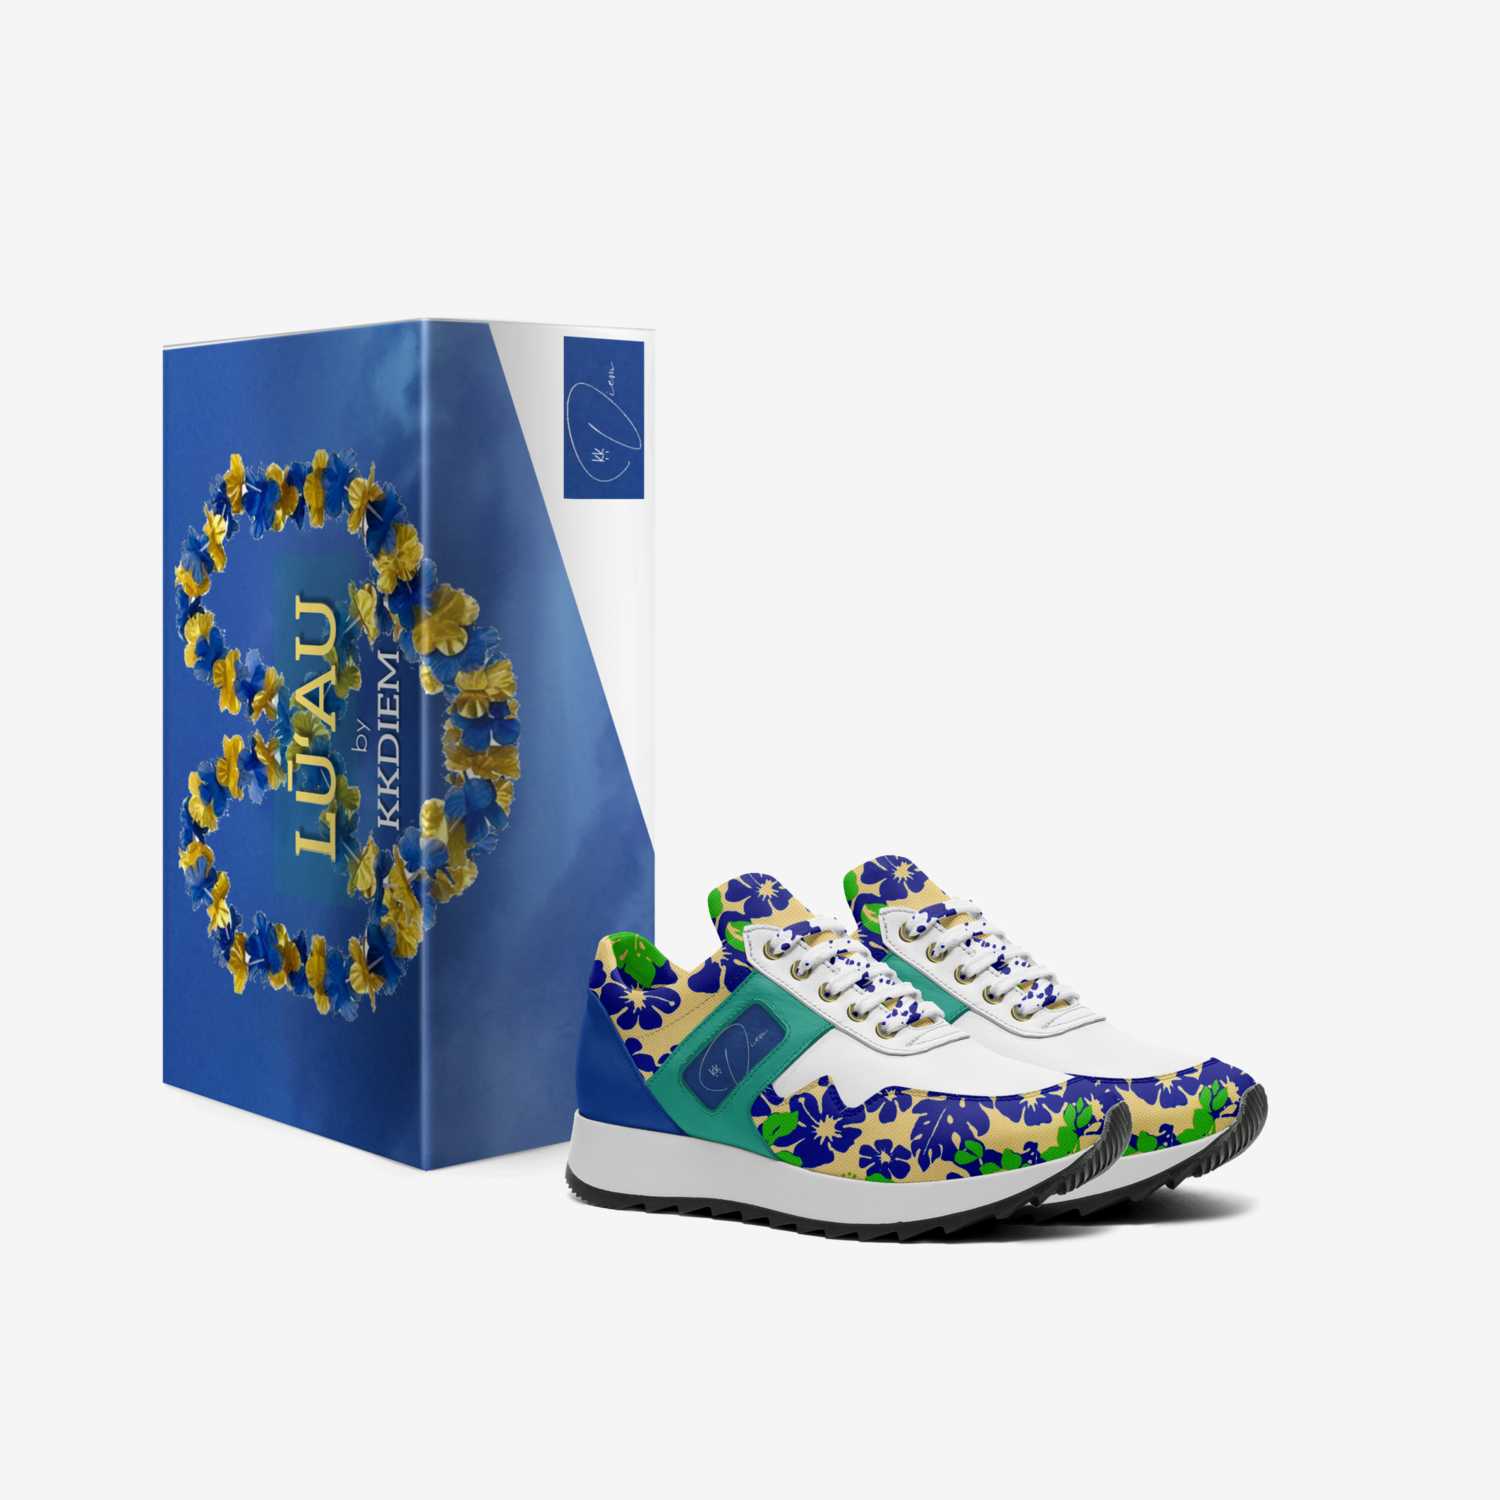 LŪʻAU custom made in Italy shoes by ķ ķ | Box view